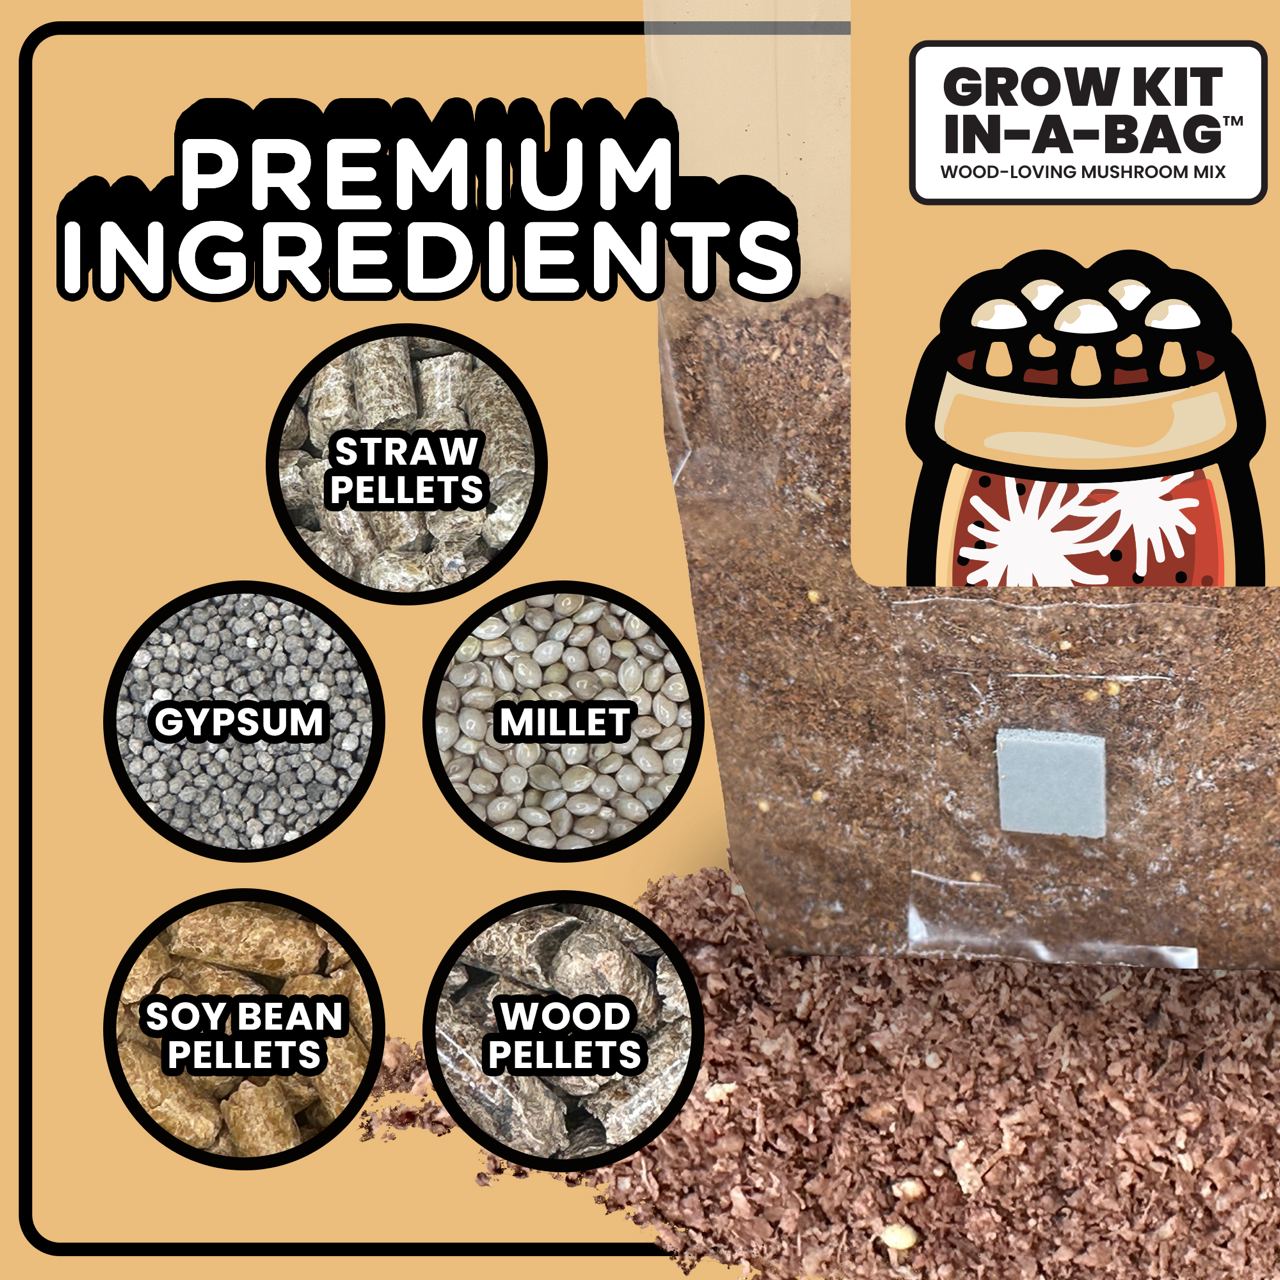 All-In-One Mushroom Grow Kit (Wood-Loving) - 20 Kits  - Mushroom Supplies Co.